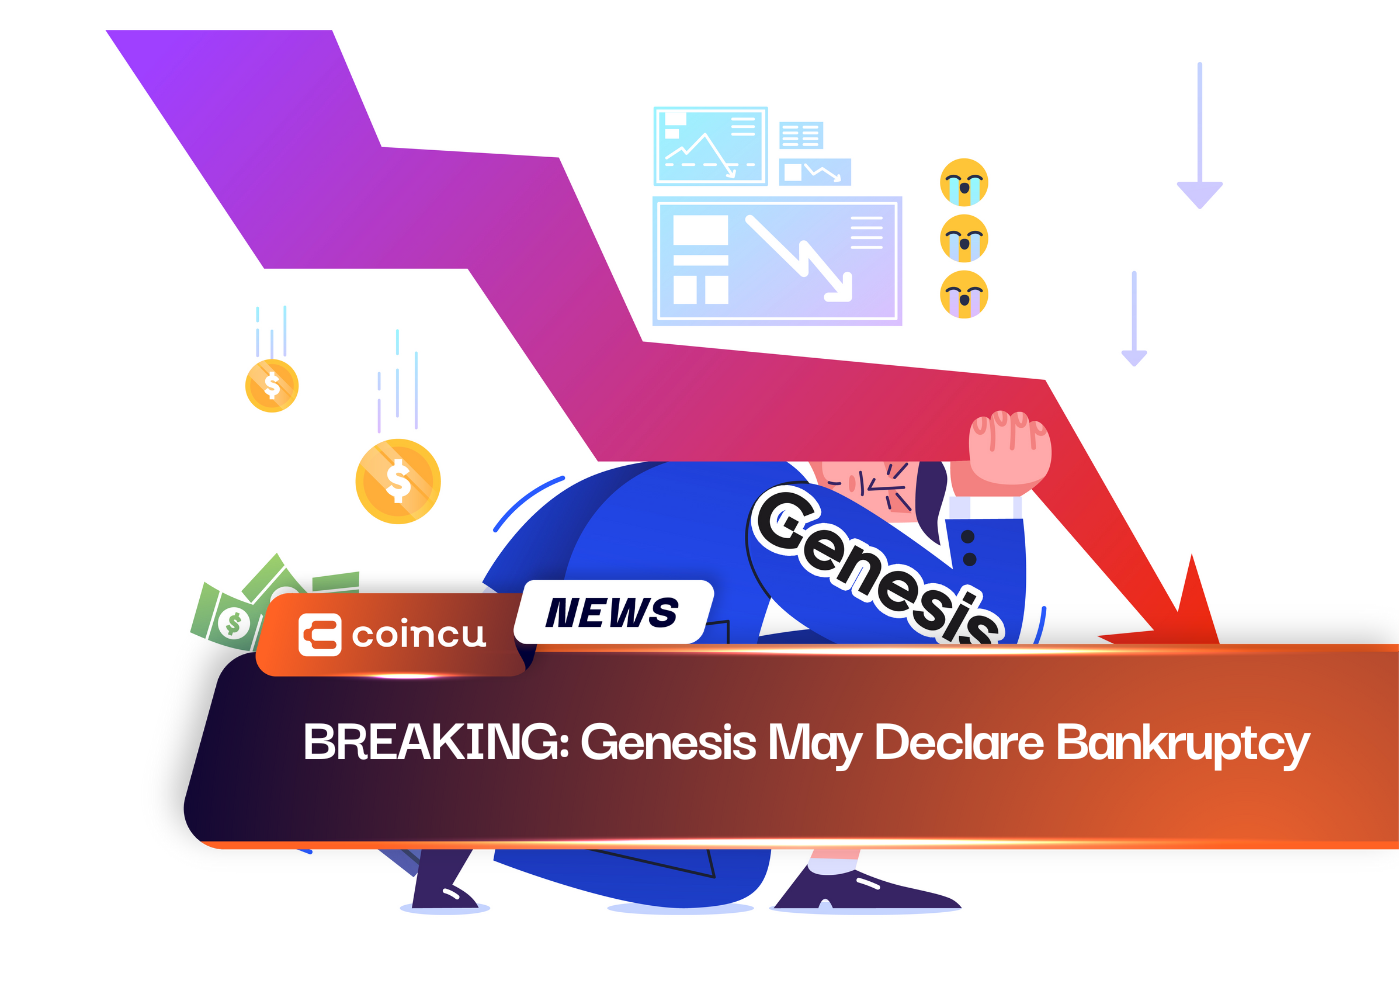 BREAKING: Genesis May Declare Bankruptcy